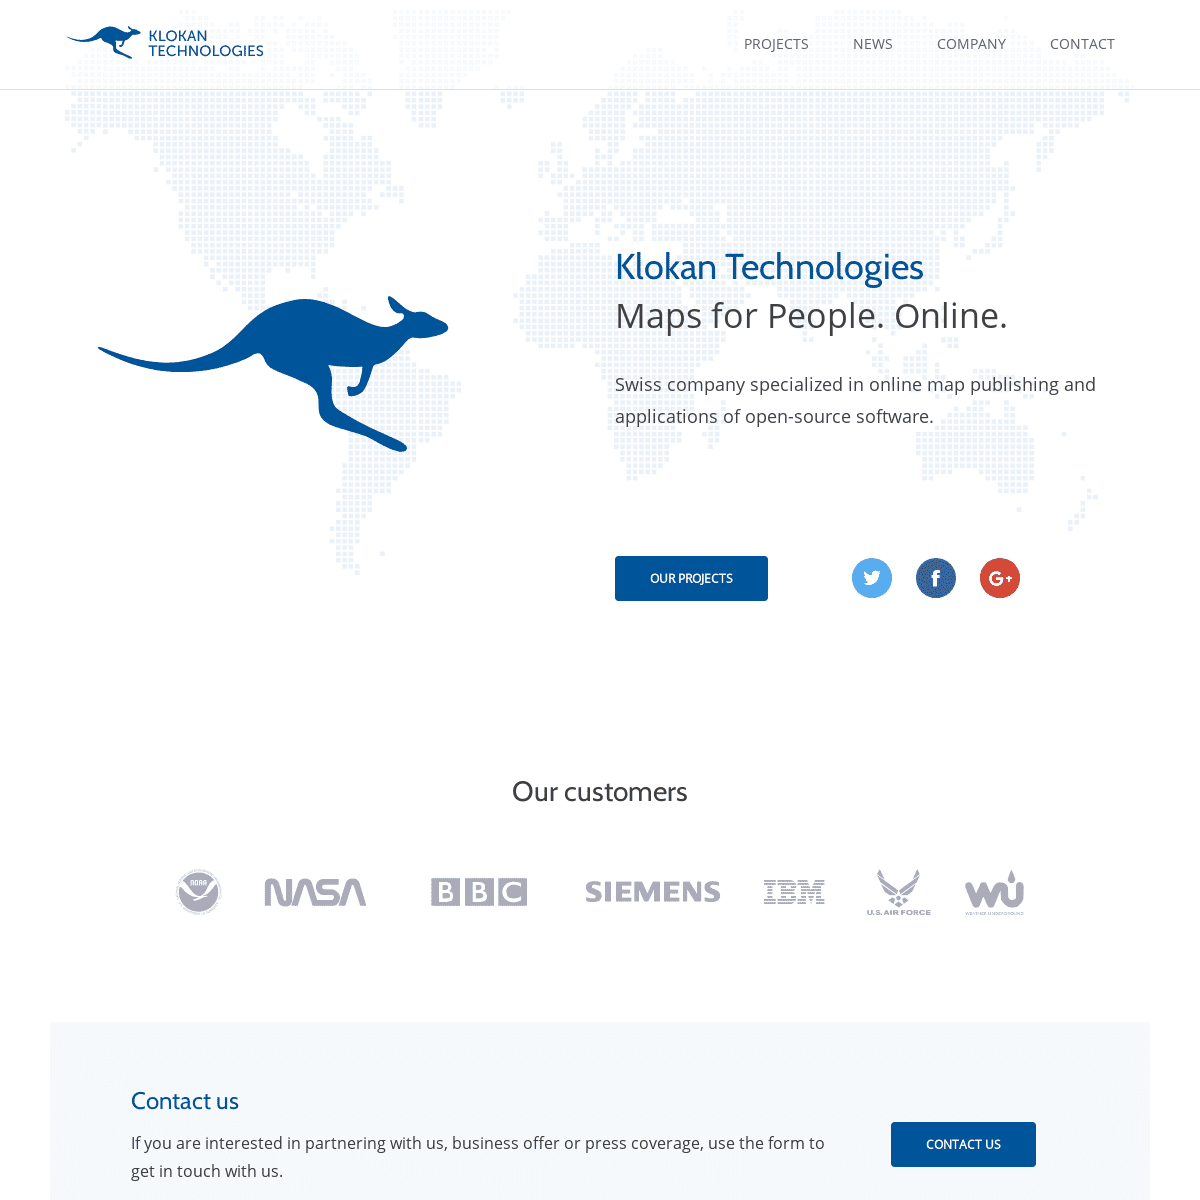 A complete backup of https://klokantech.com